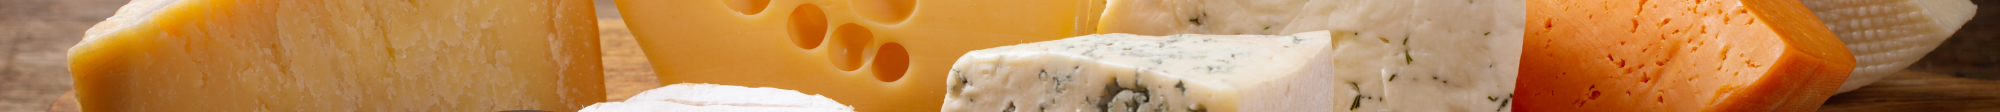 Comprar  quesos Belgica gourmet online | Mixtura Gourmet